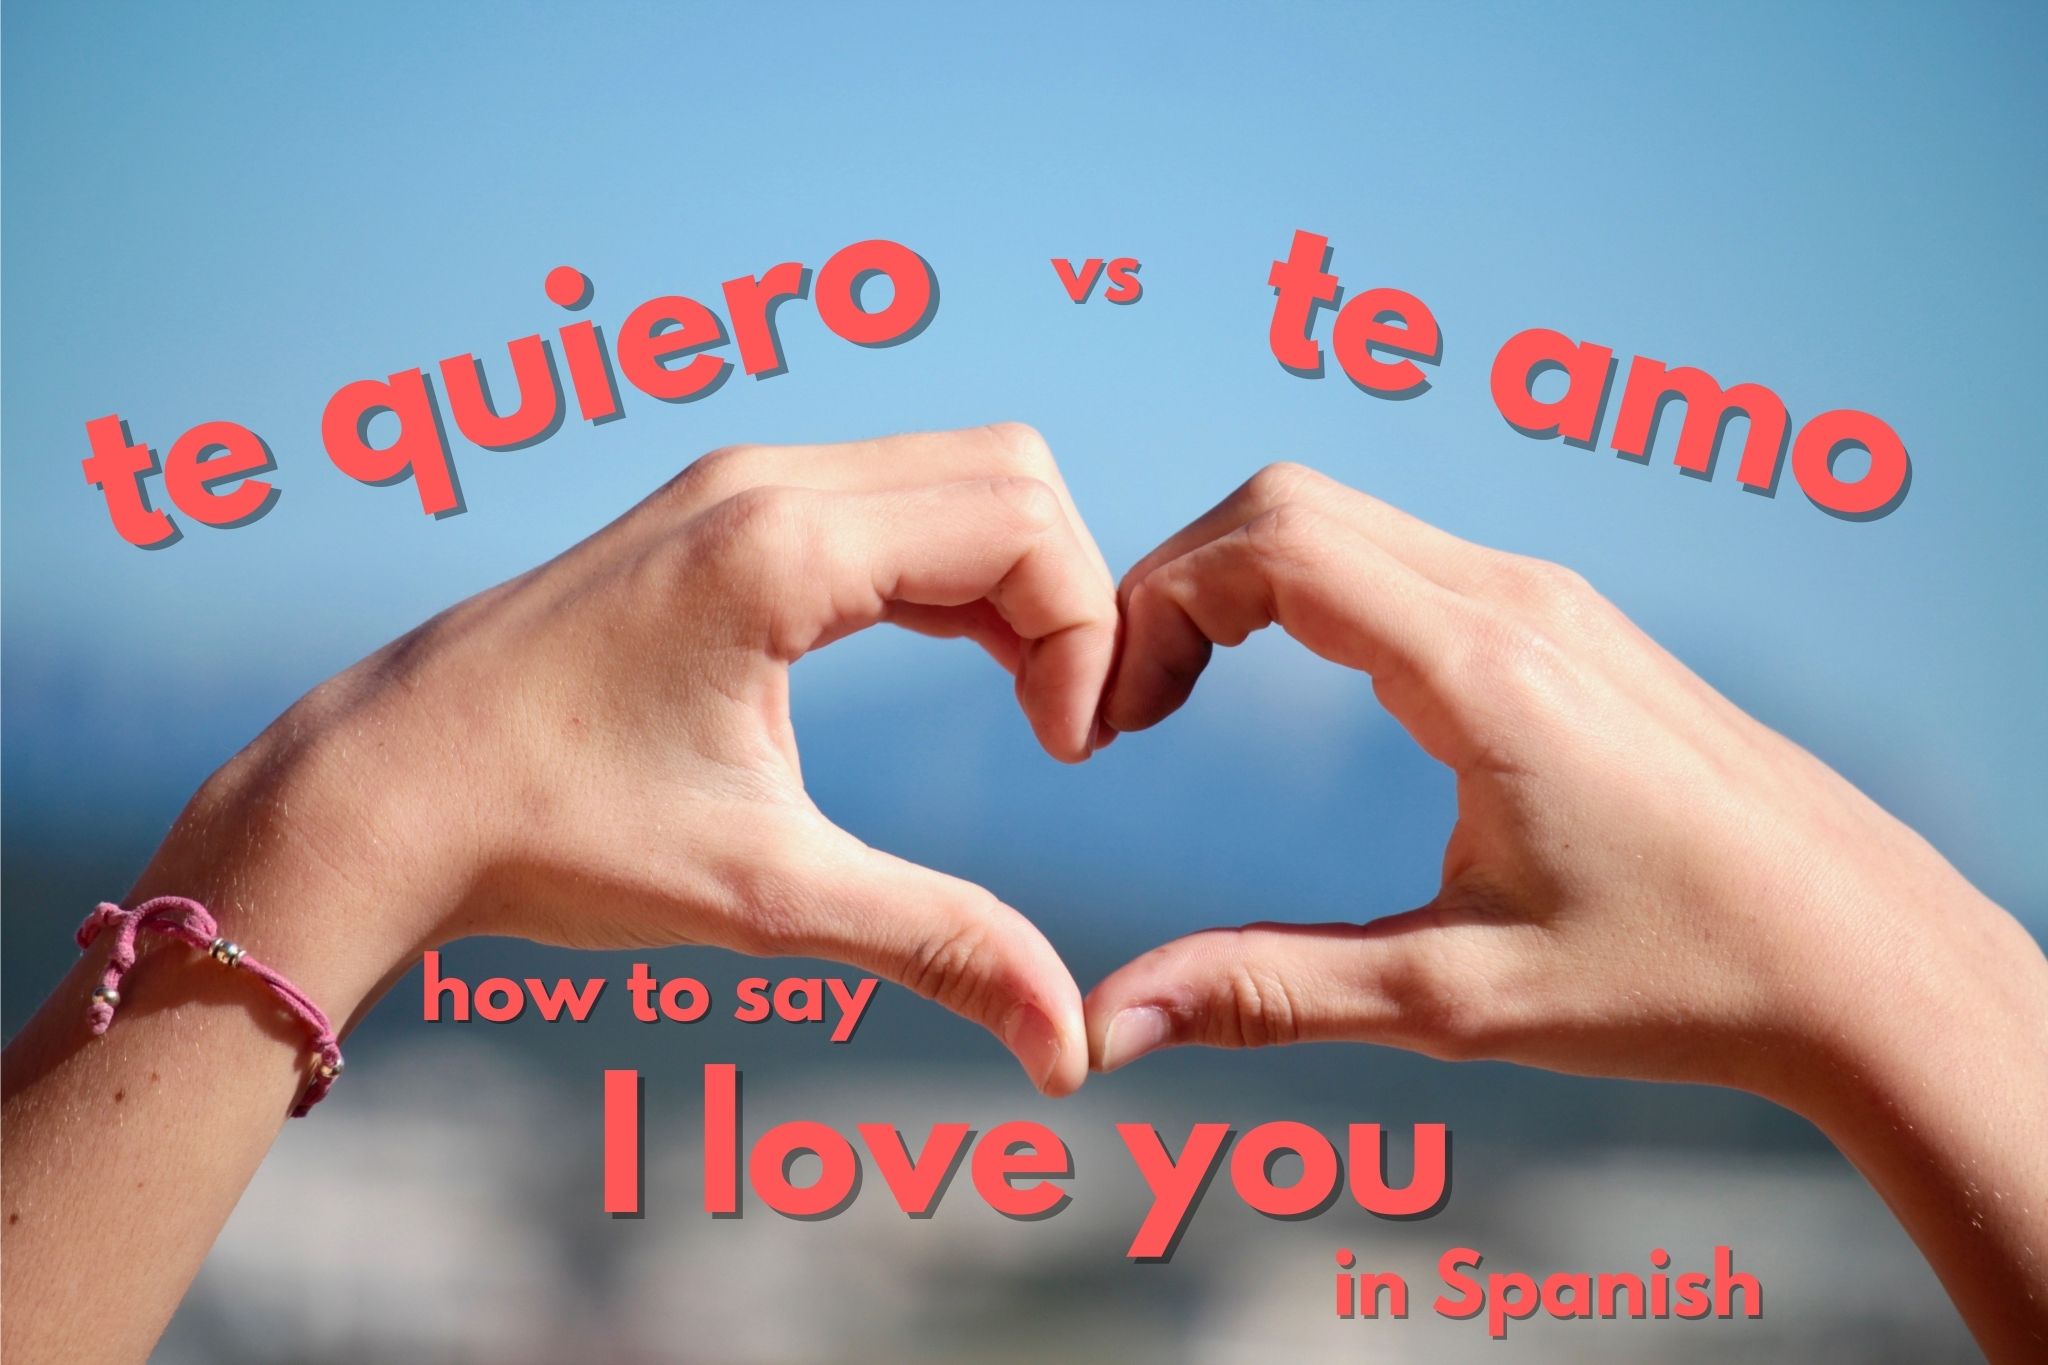 I love you in Spanish: Te quiero vs Te amo